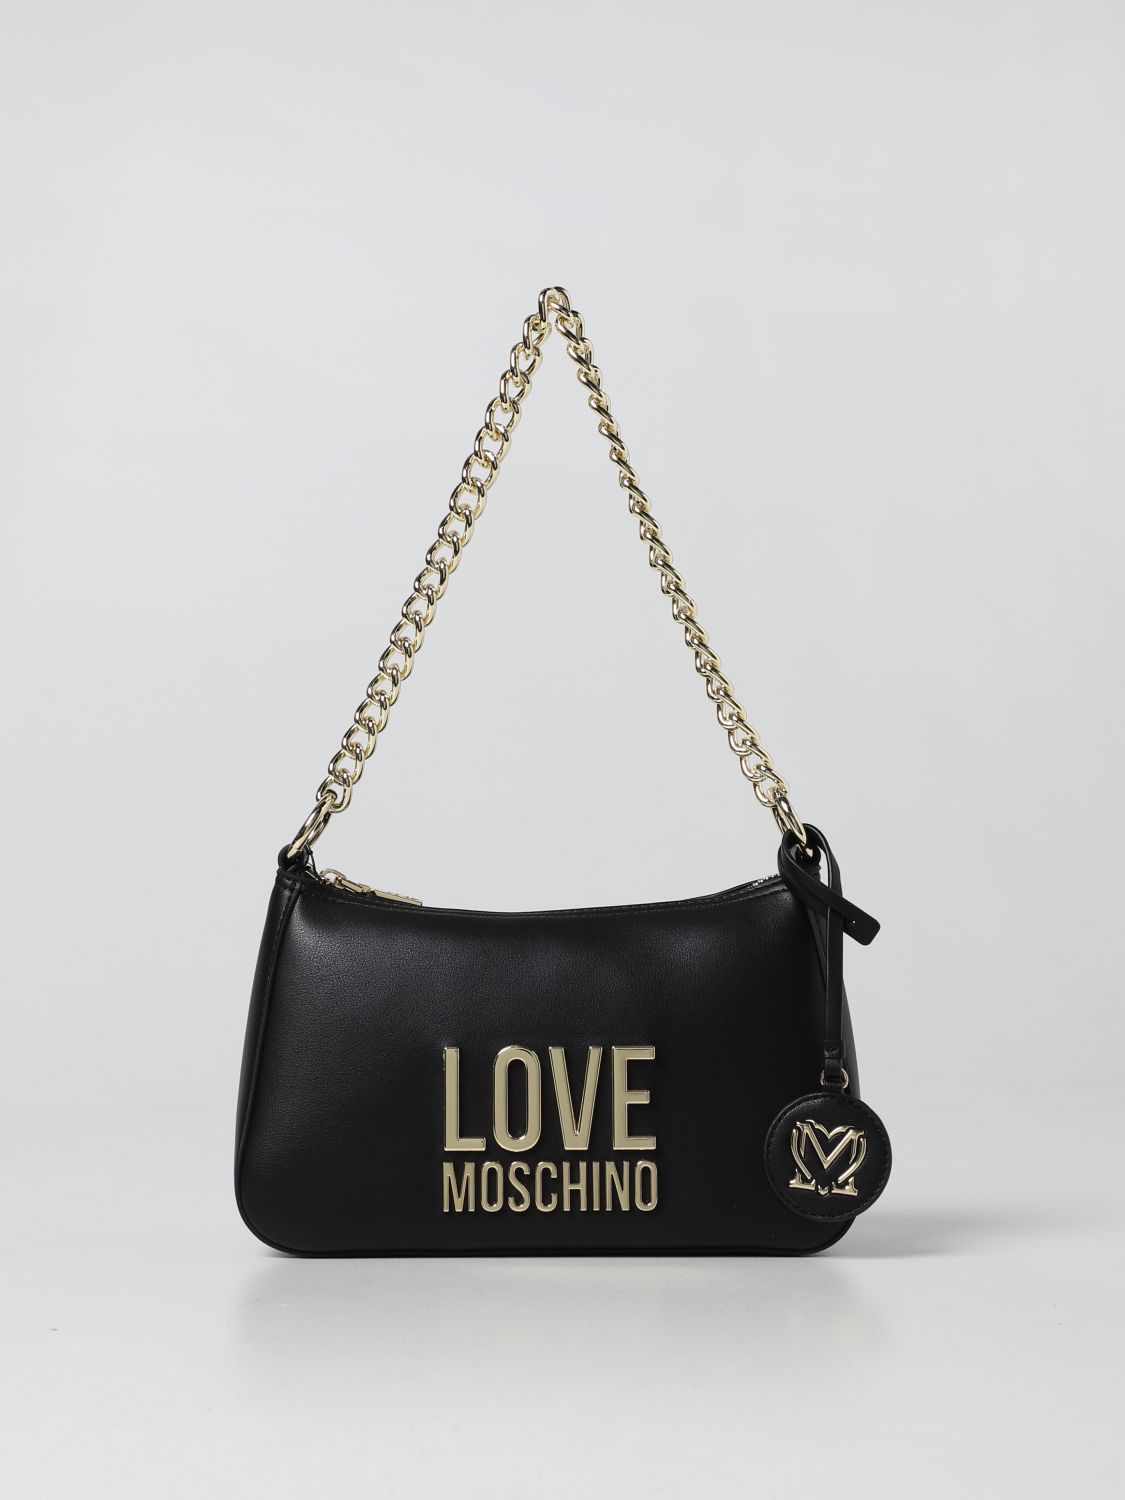 Aas Betrouwbaar Slot Love moschino logo shoulder bag, Bewaar 63% grote korting - hazhartfk.com